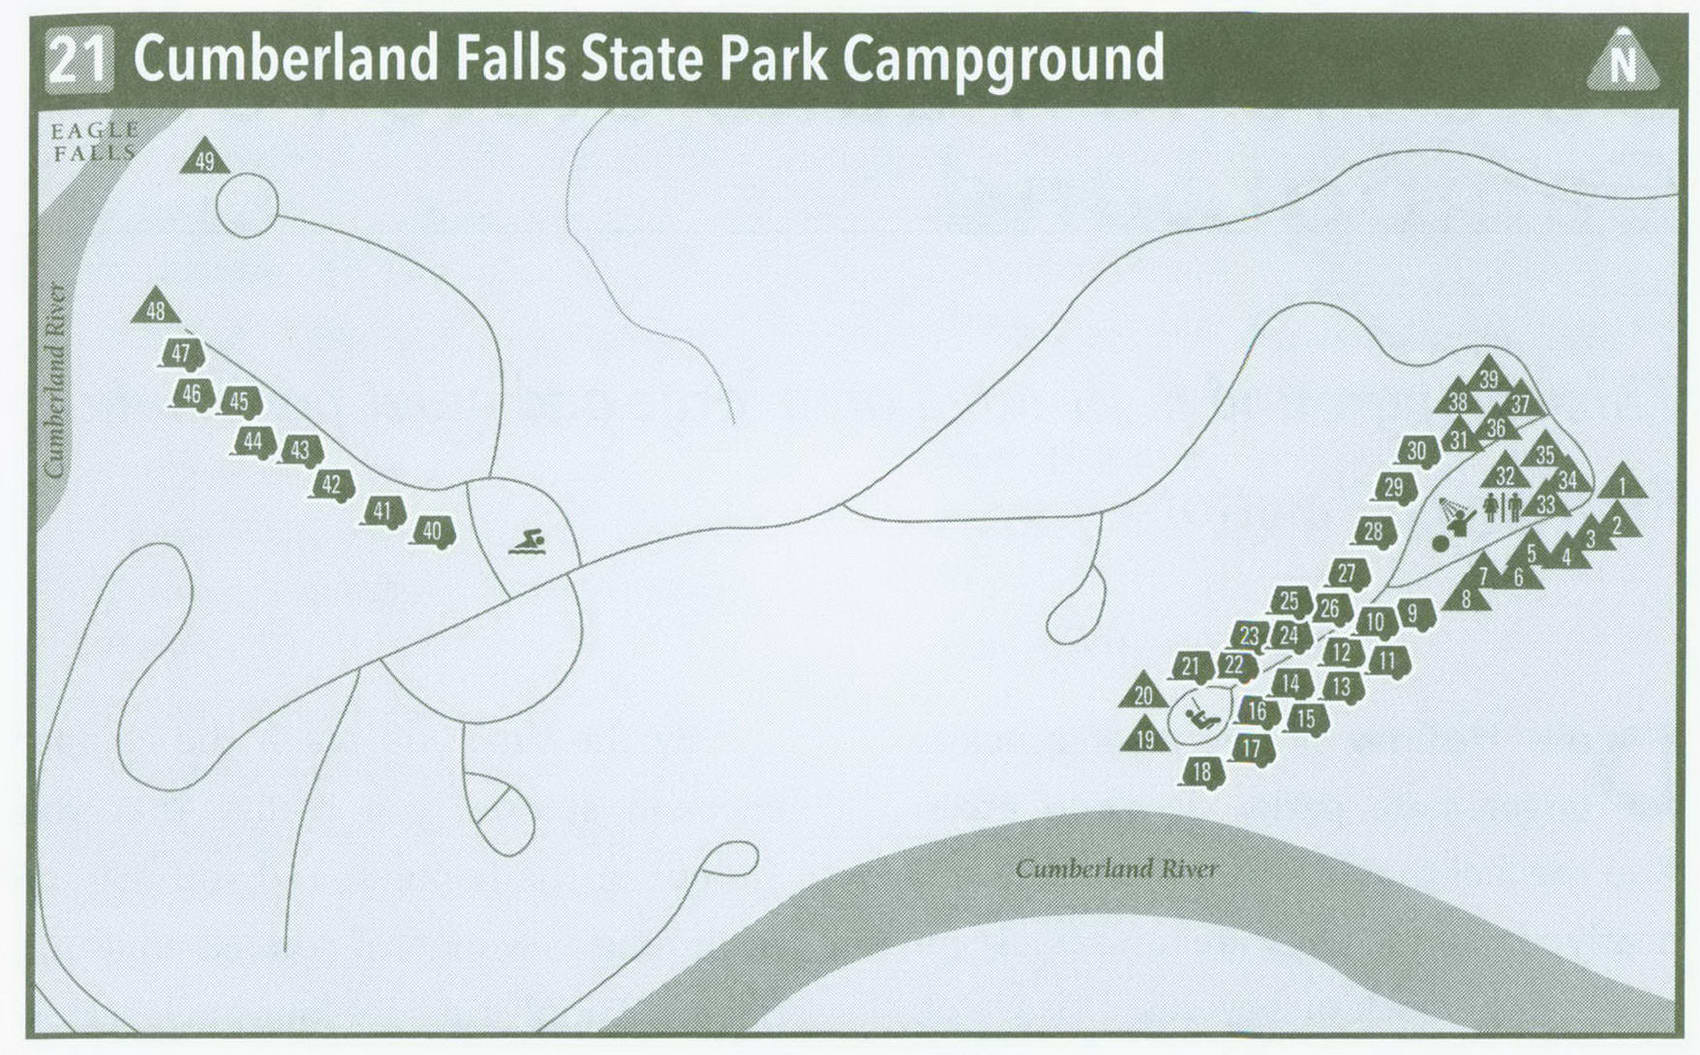 Plan of Cumberland Falls State Park Campground